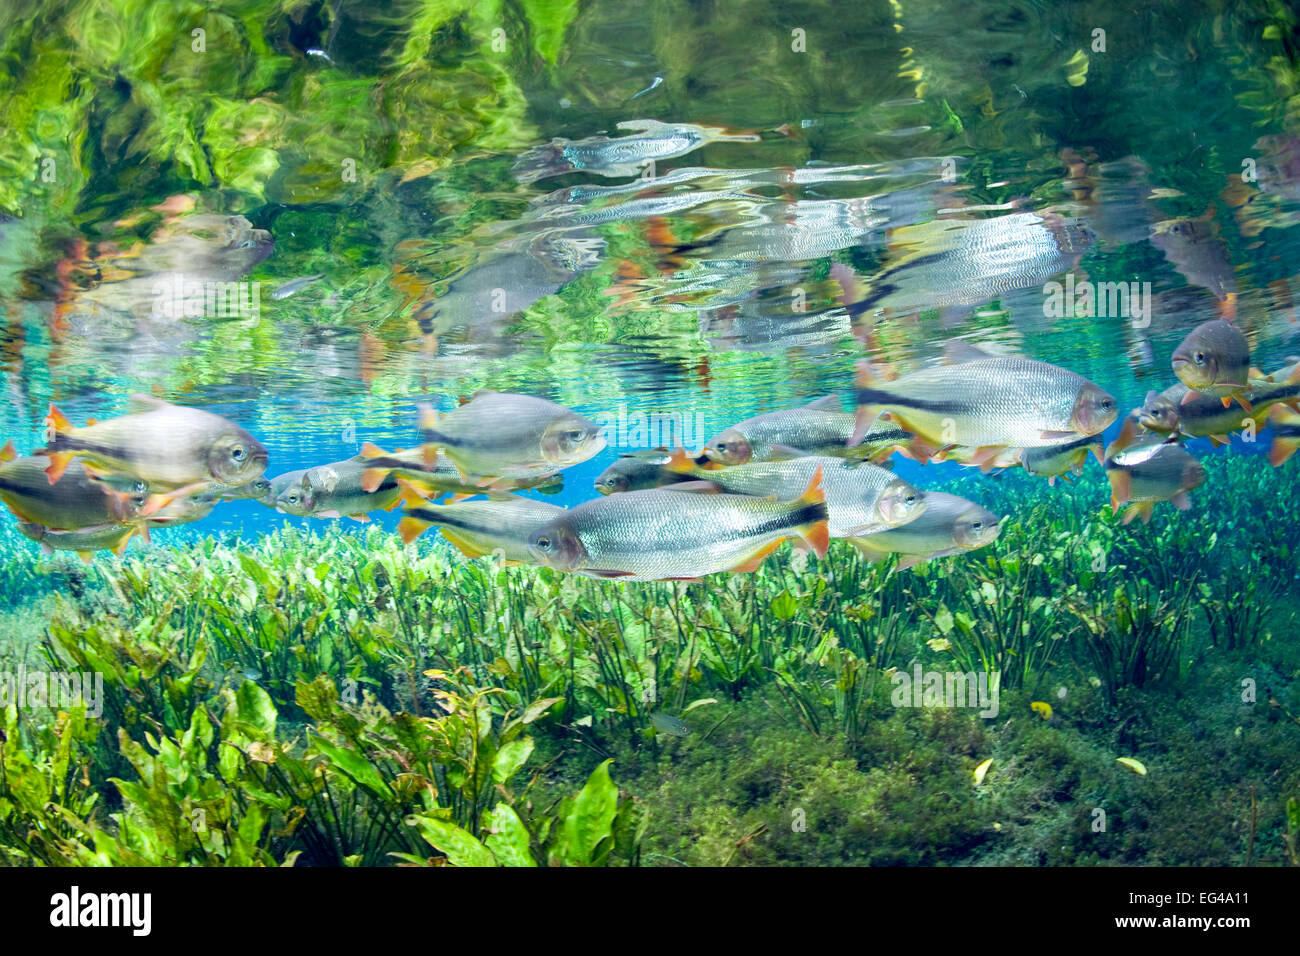 Piraputanga (Brycon hilarii) reflecting on the water surface Aqua¡rio Natural Bonito Mato Grosso do Sul Brazil Stock Photo